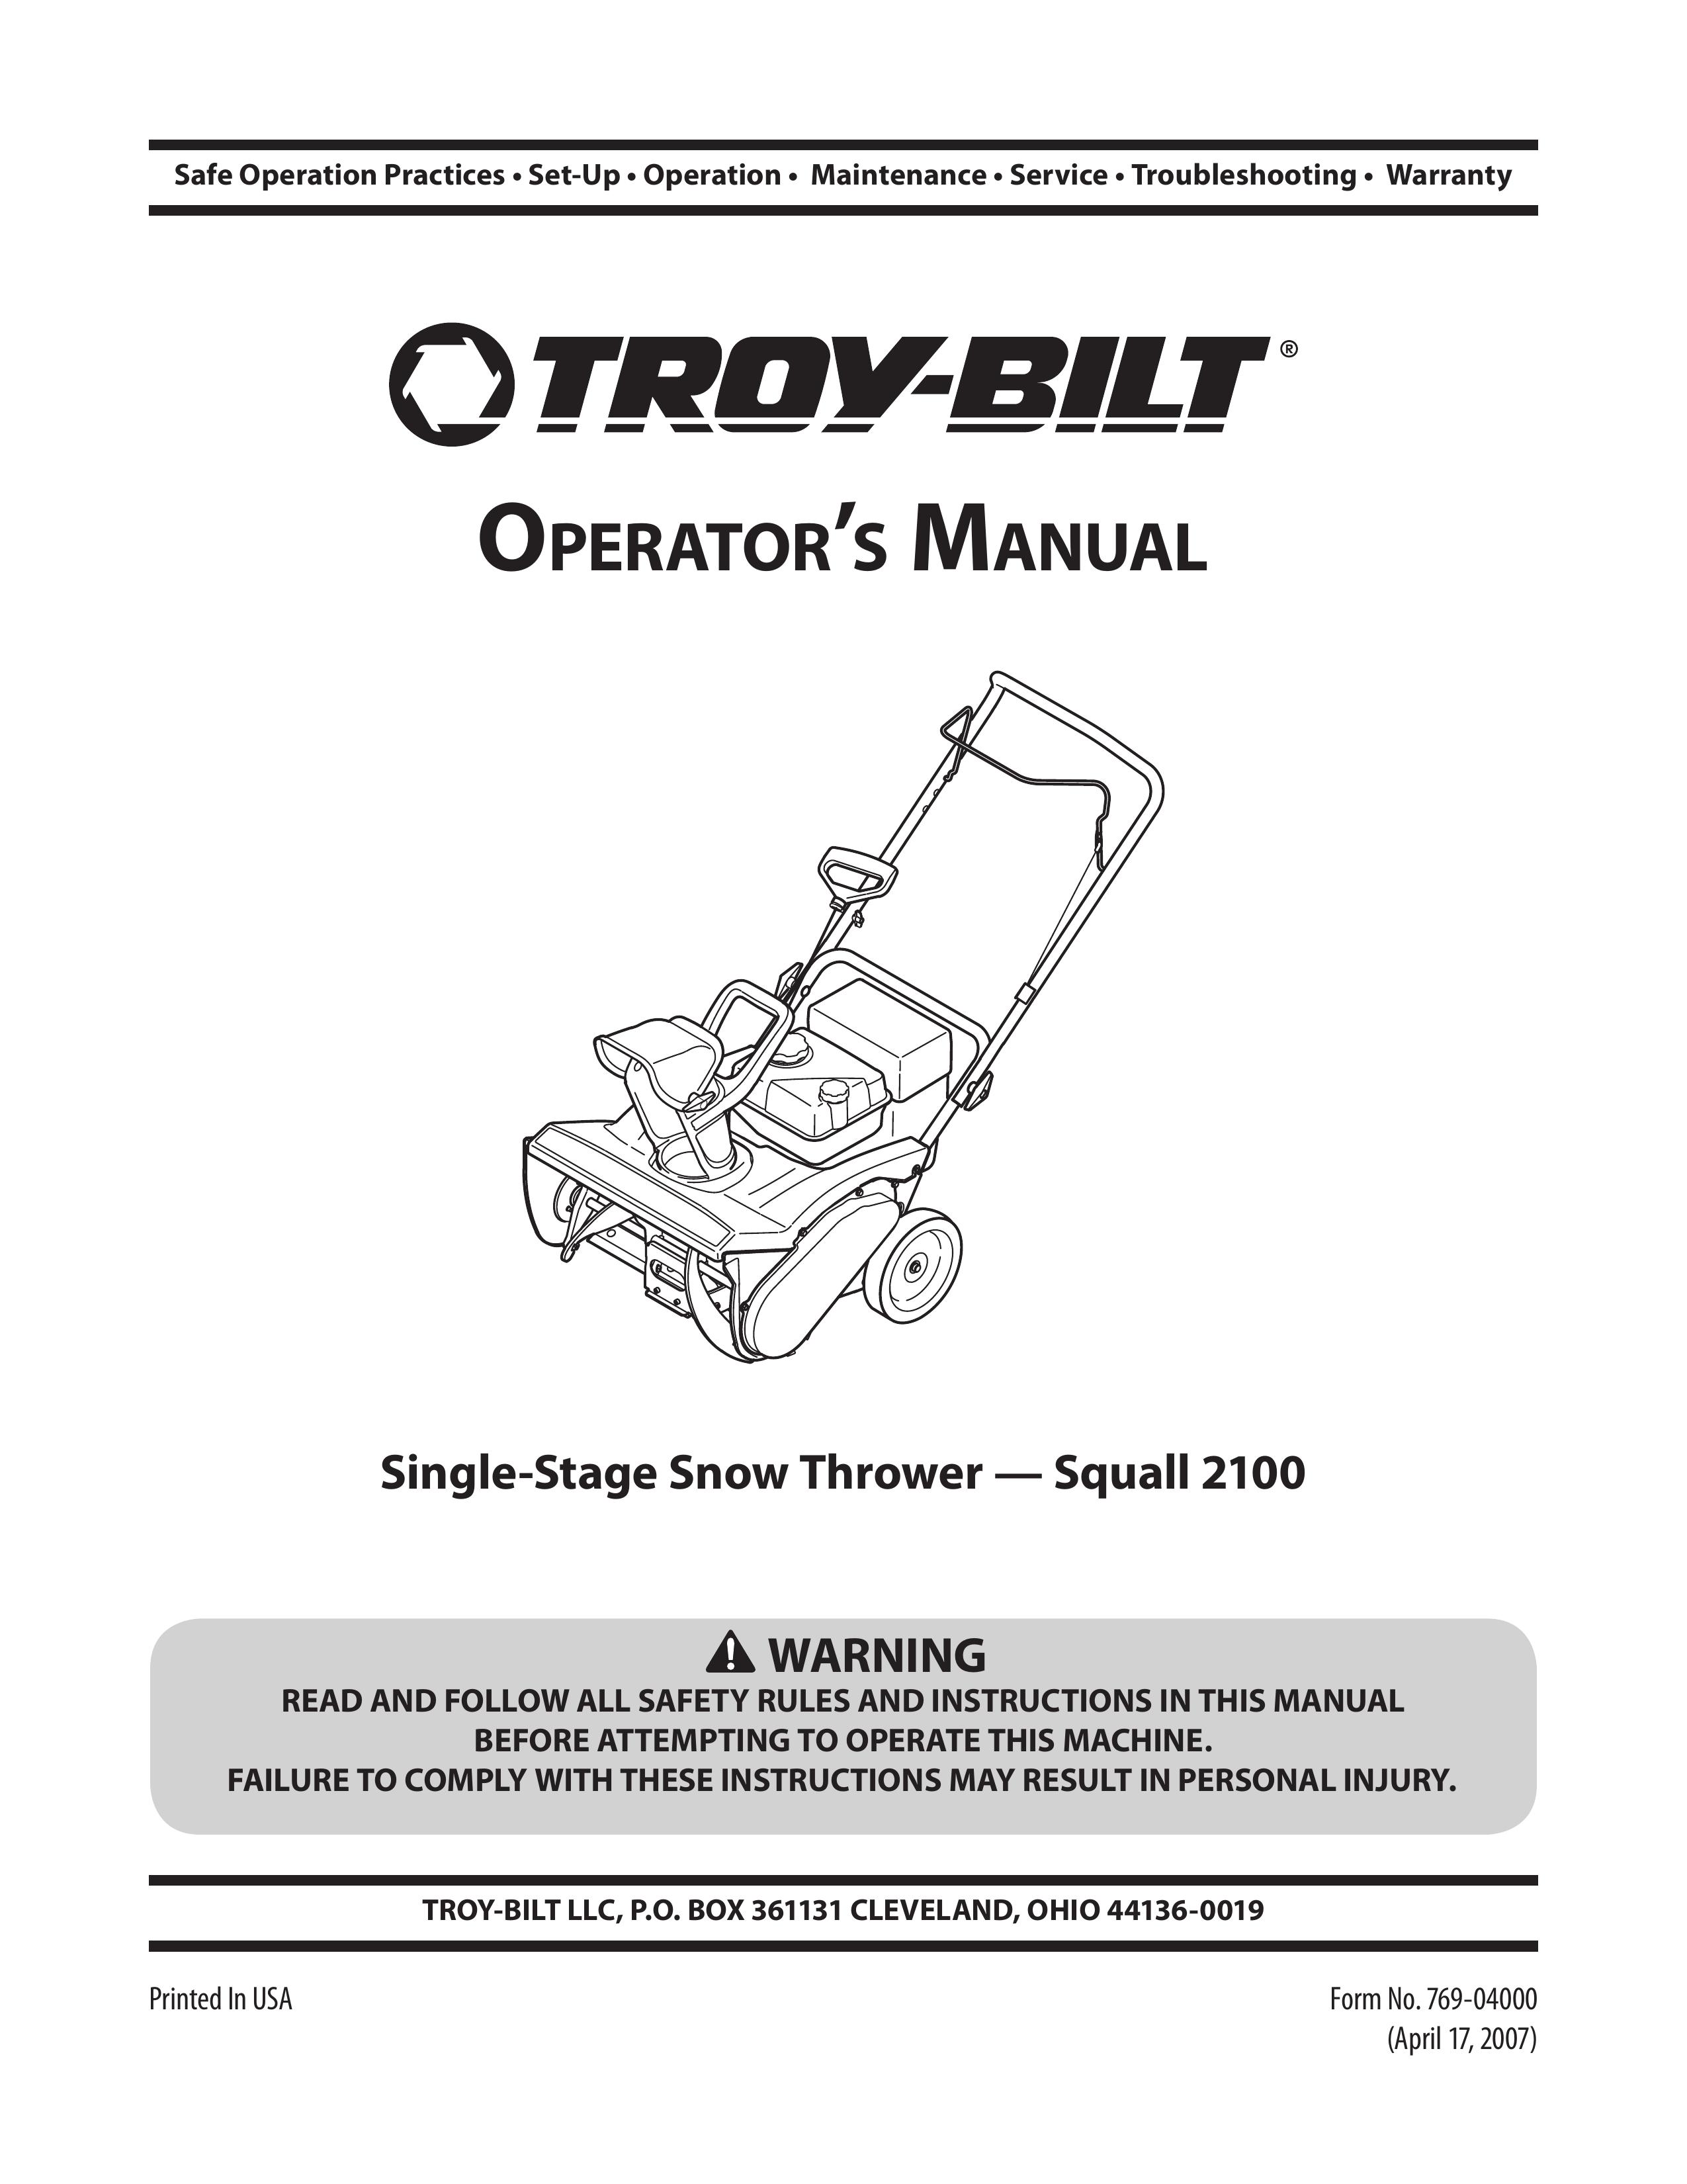 Troy-Bilt 2100 Snow Blower User Manual